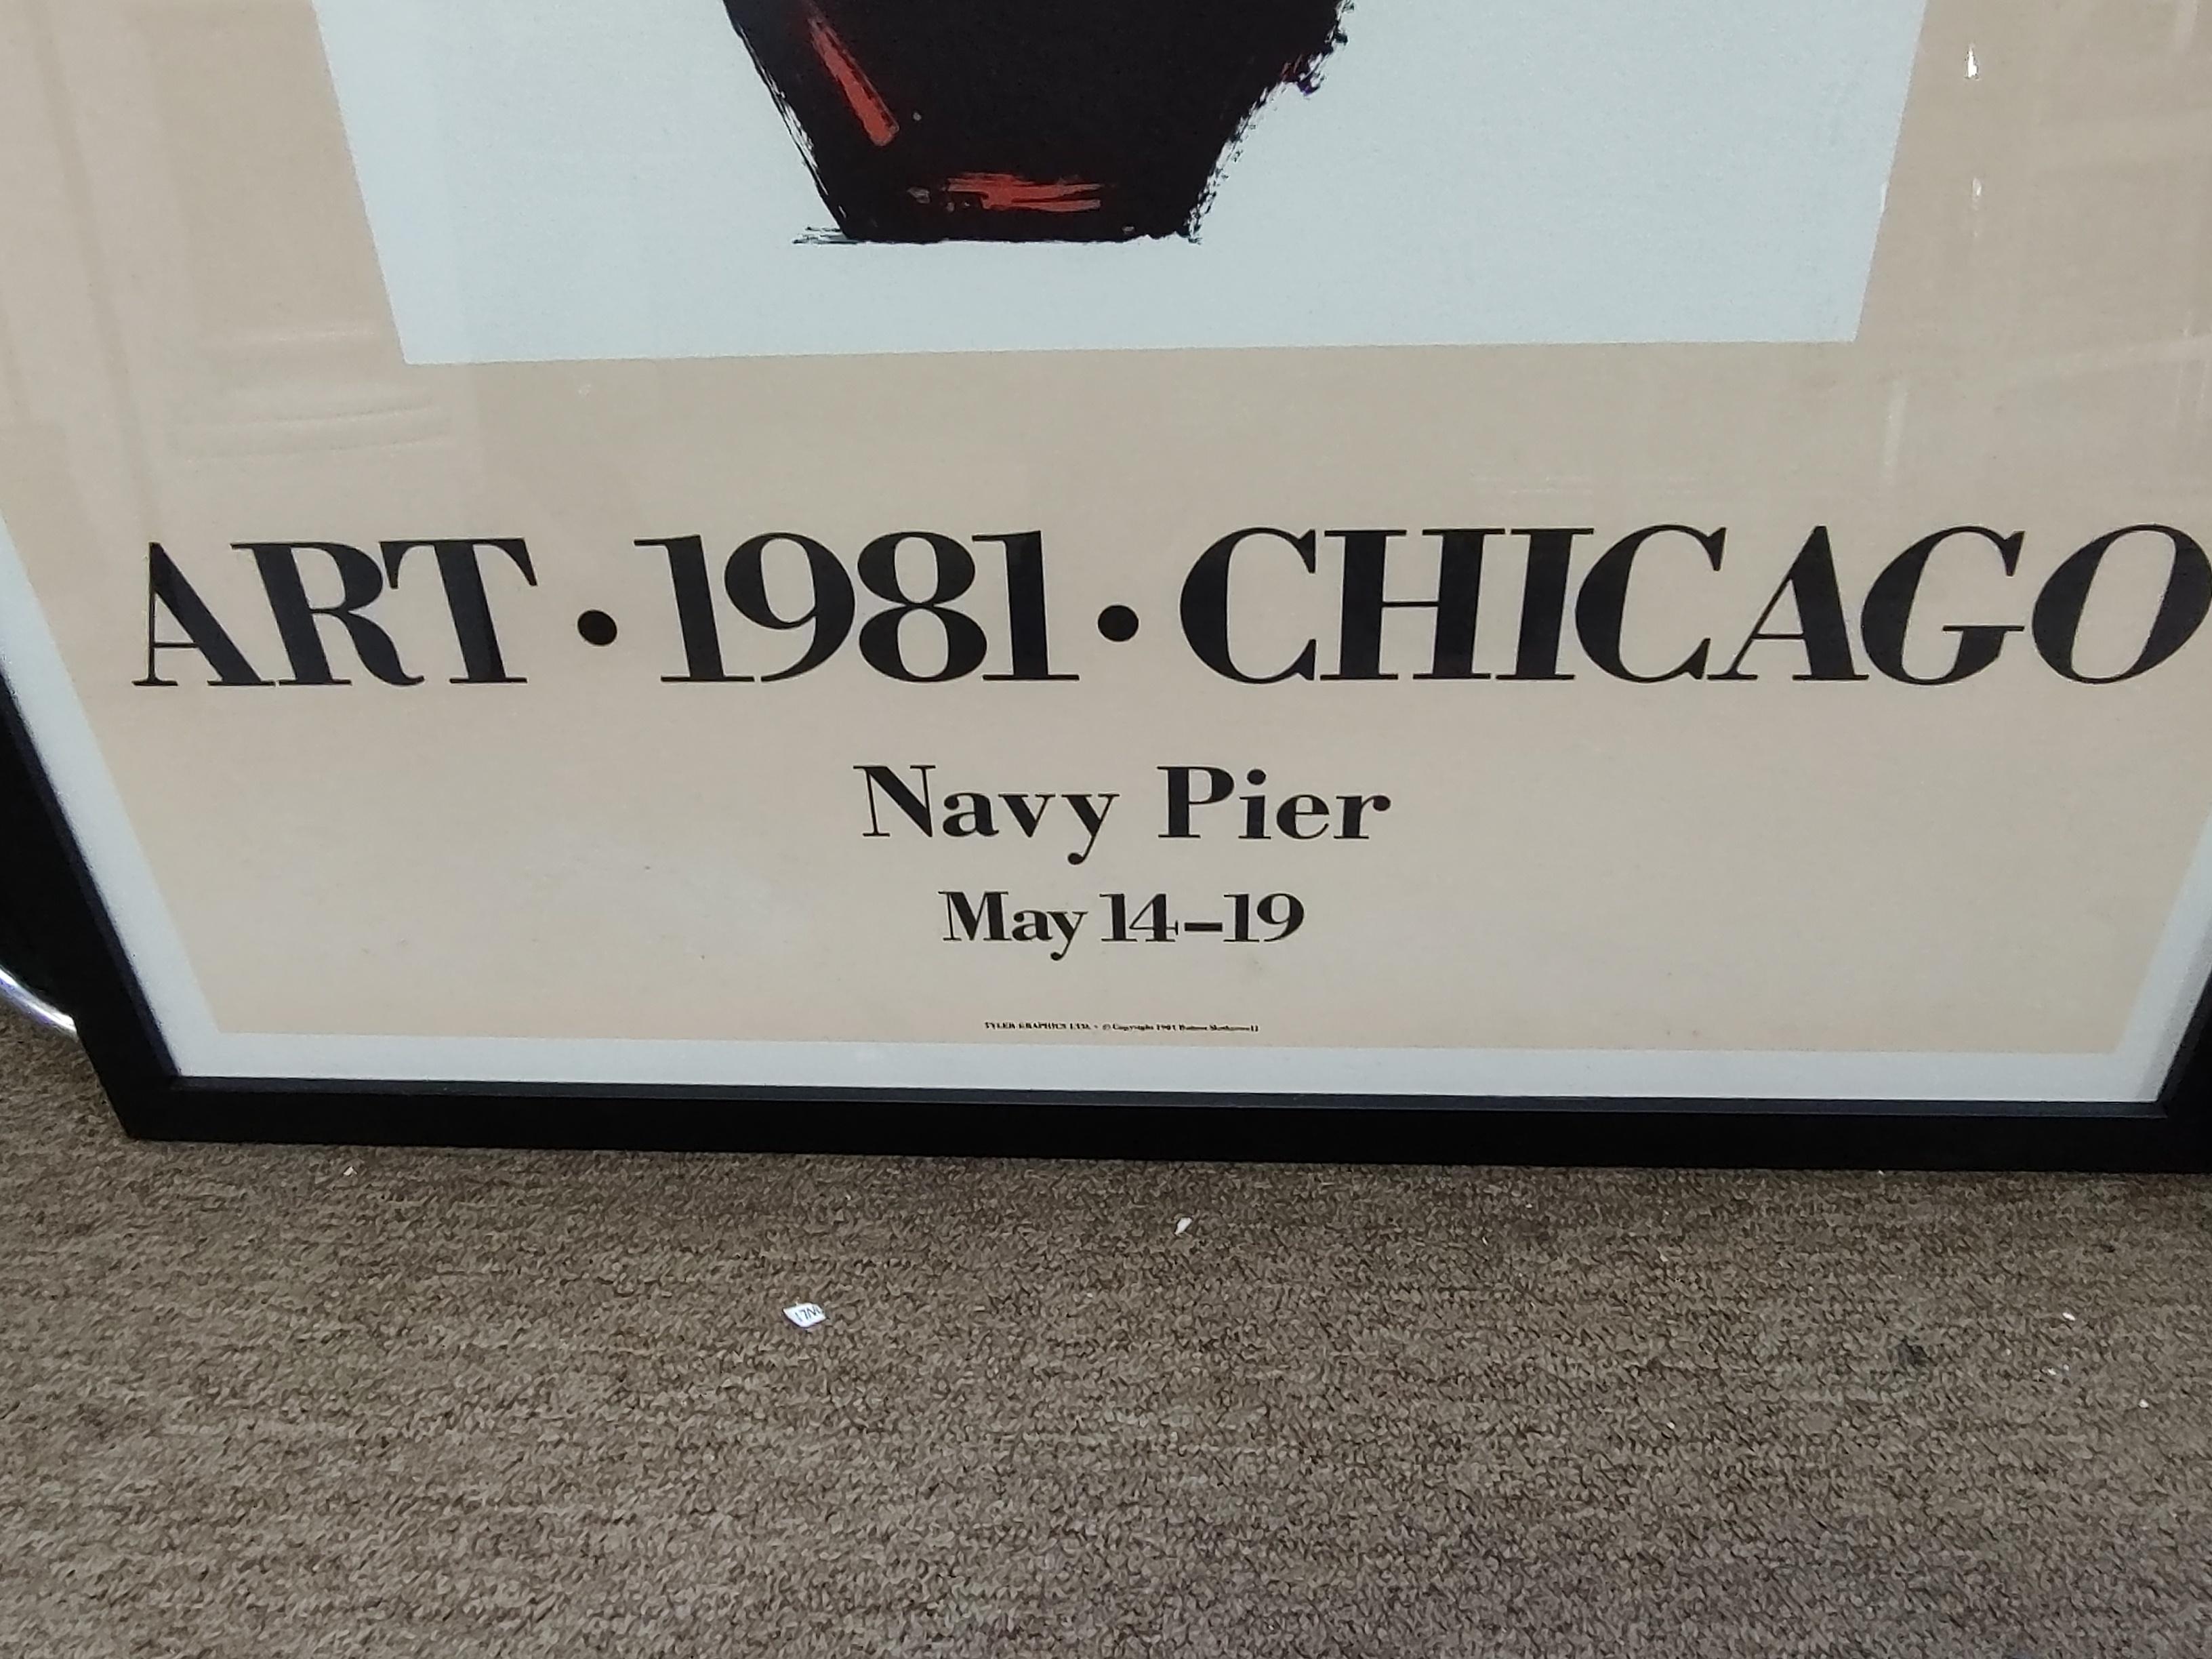 American Mid-Century Modern Robert Motherwell Poster Chicago Exhibit, 1981